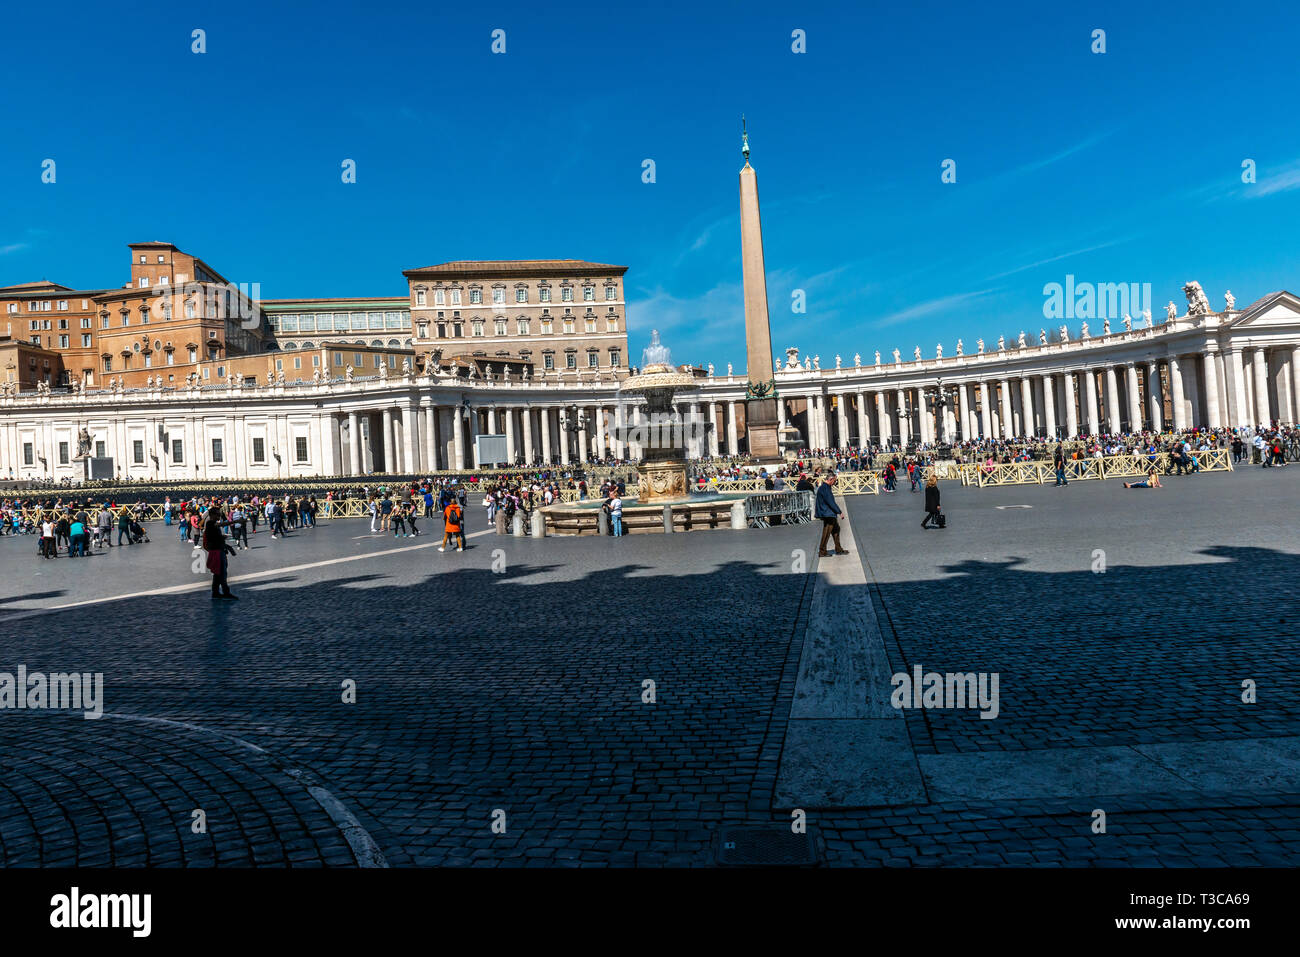 St Peters Square, Rome, Italie Banque D'Images